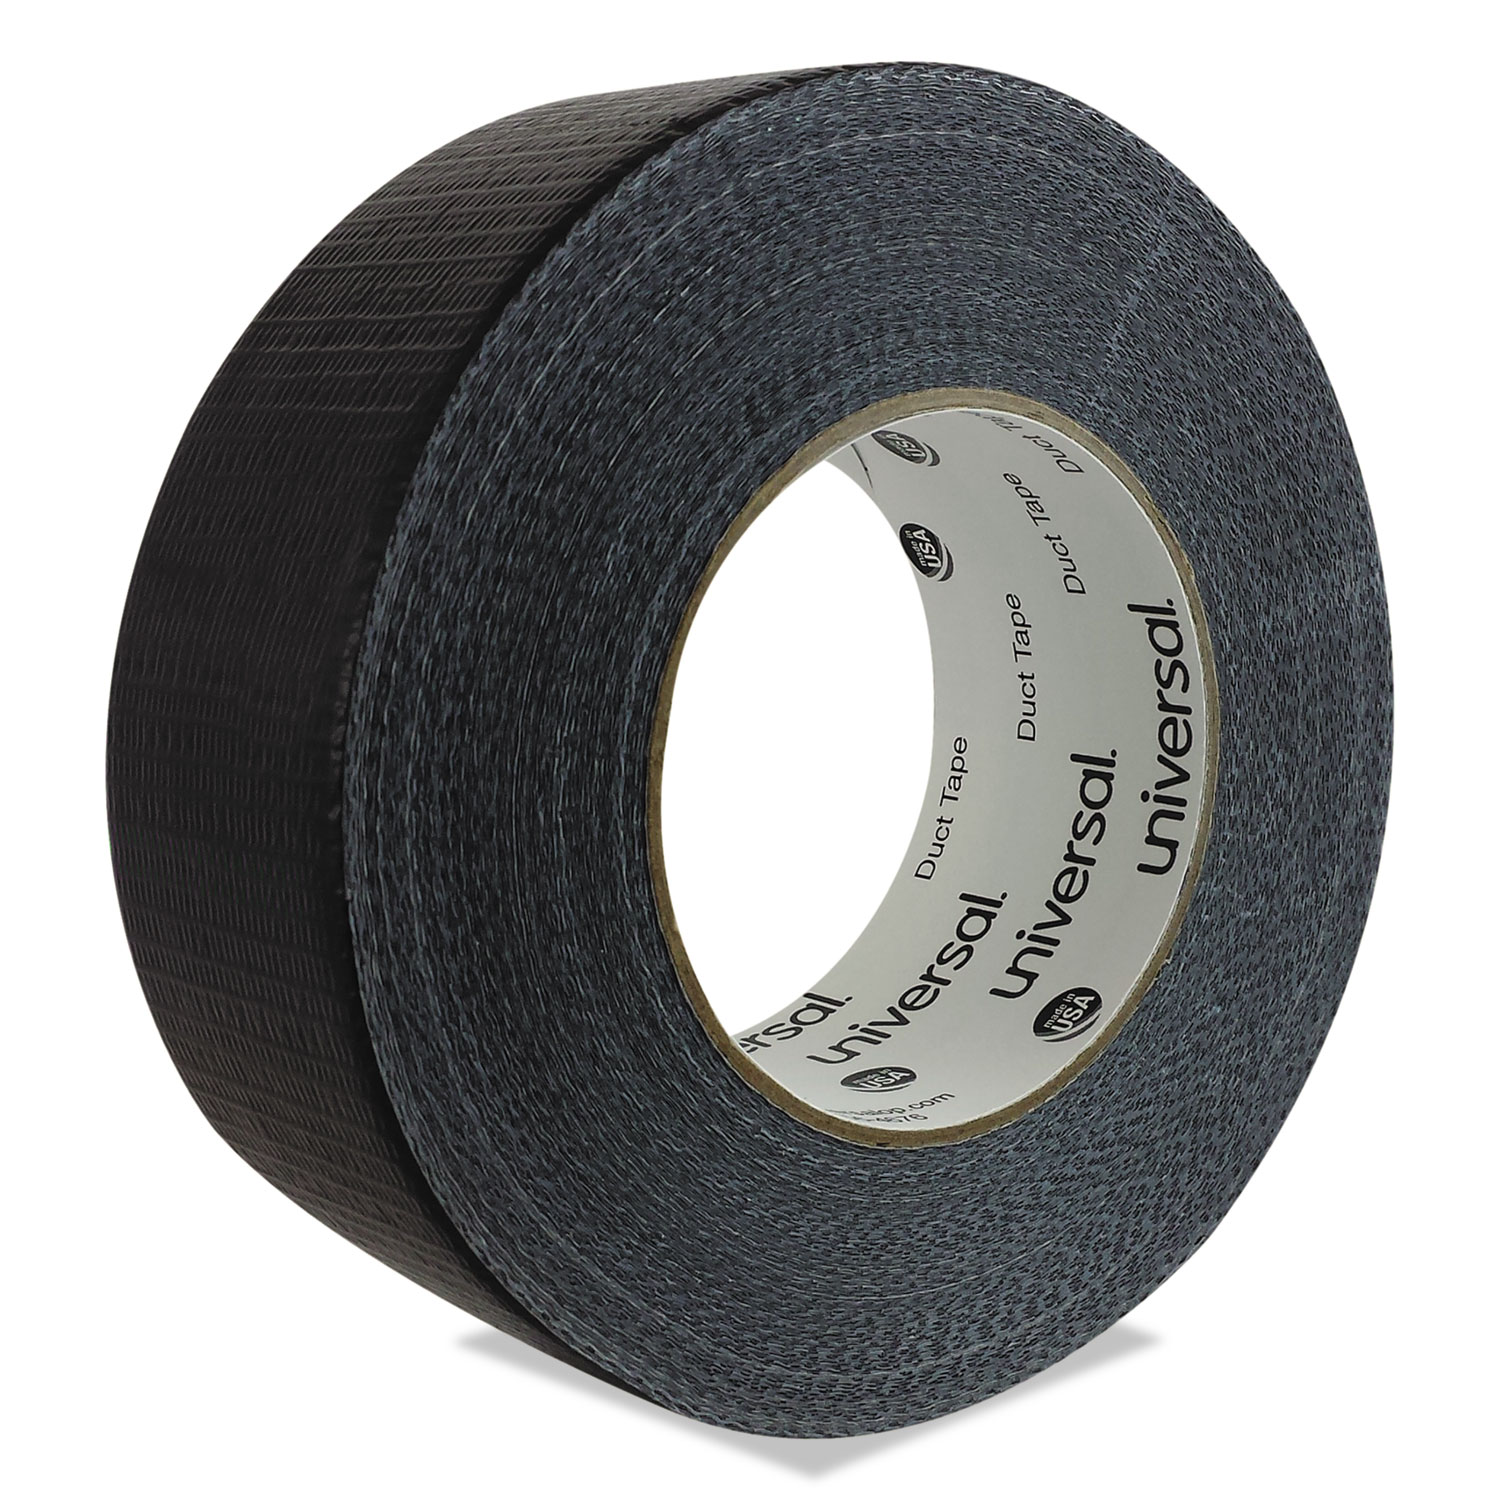 General Purpose Duct Tape, 48mm x 54.8m, Black